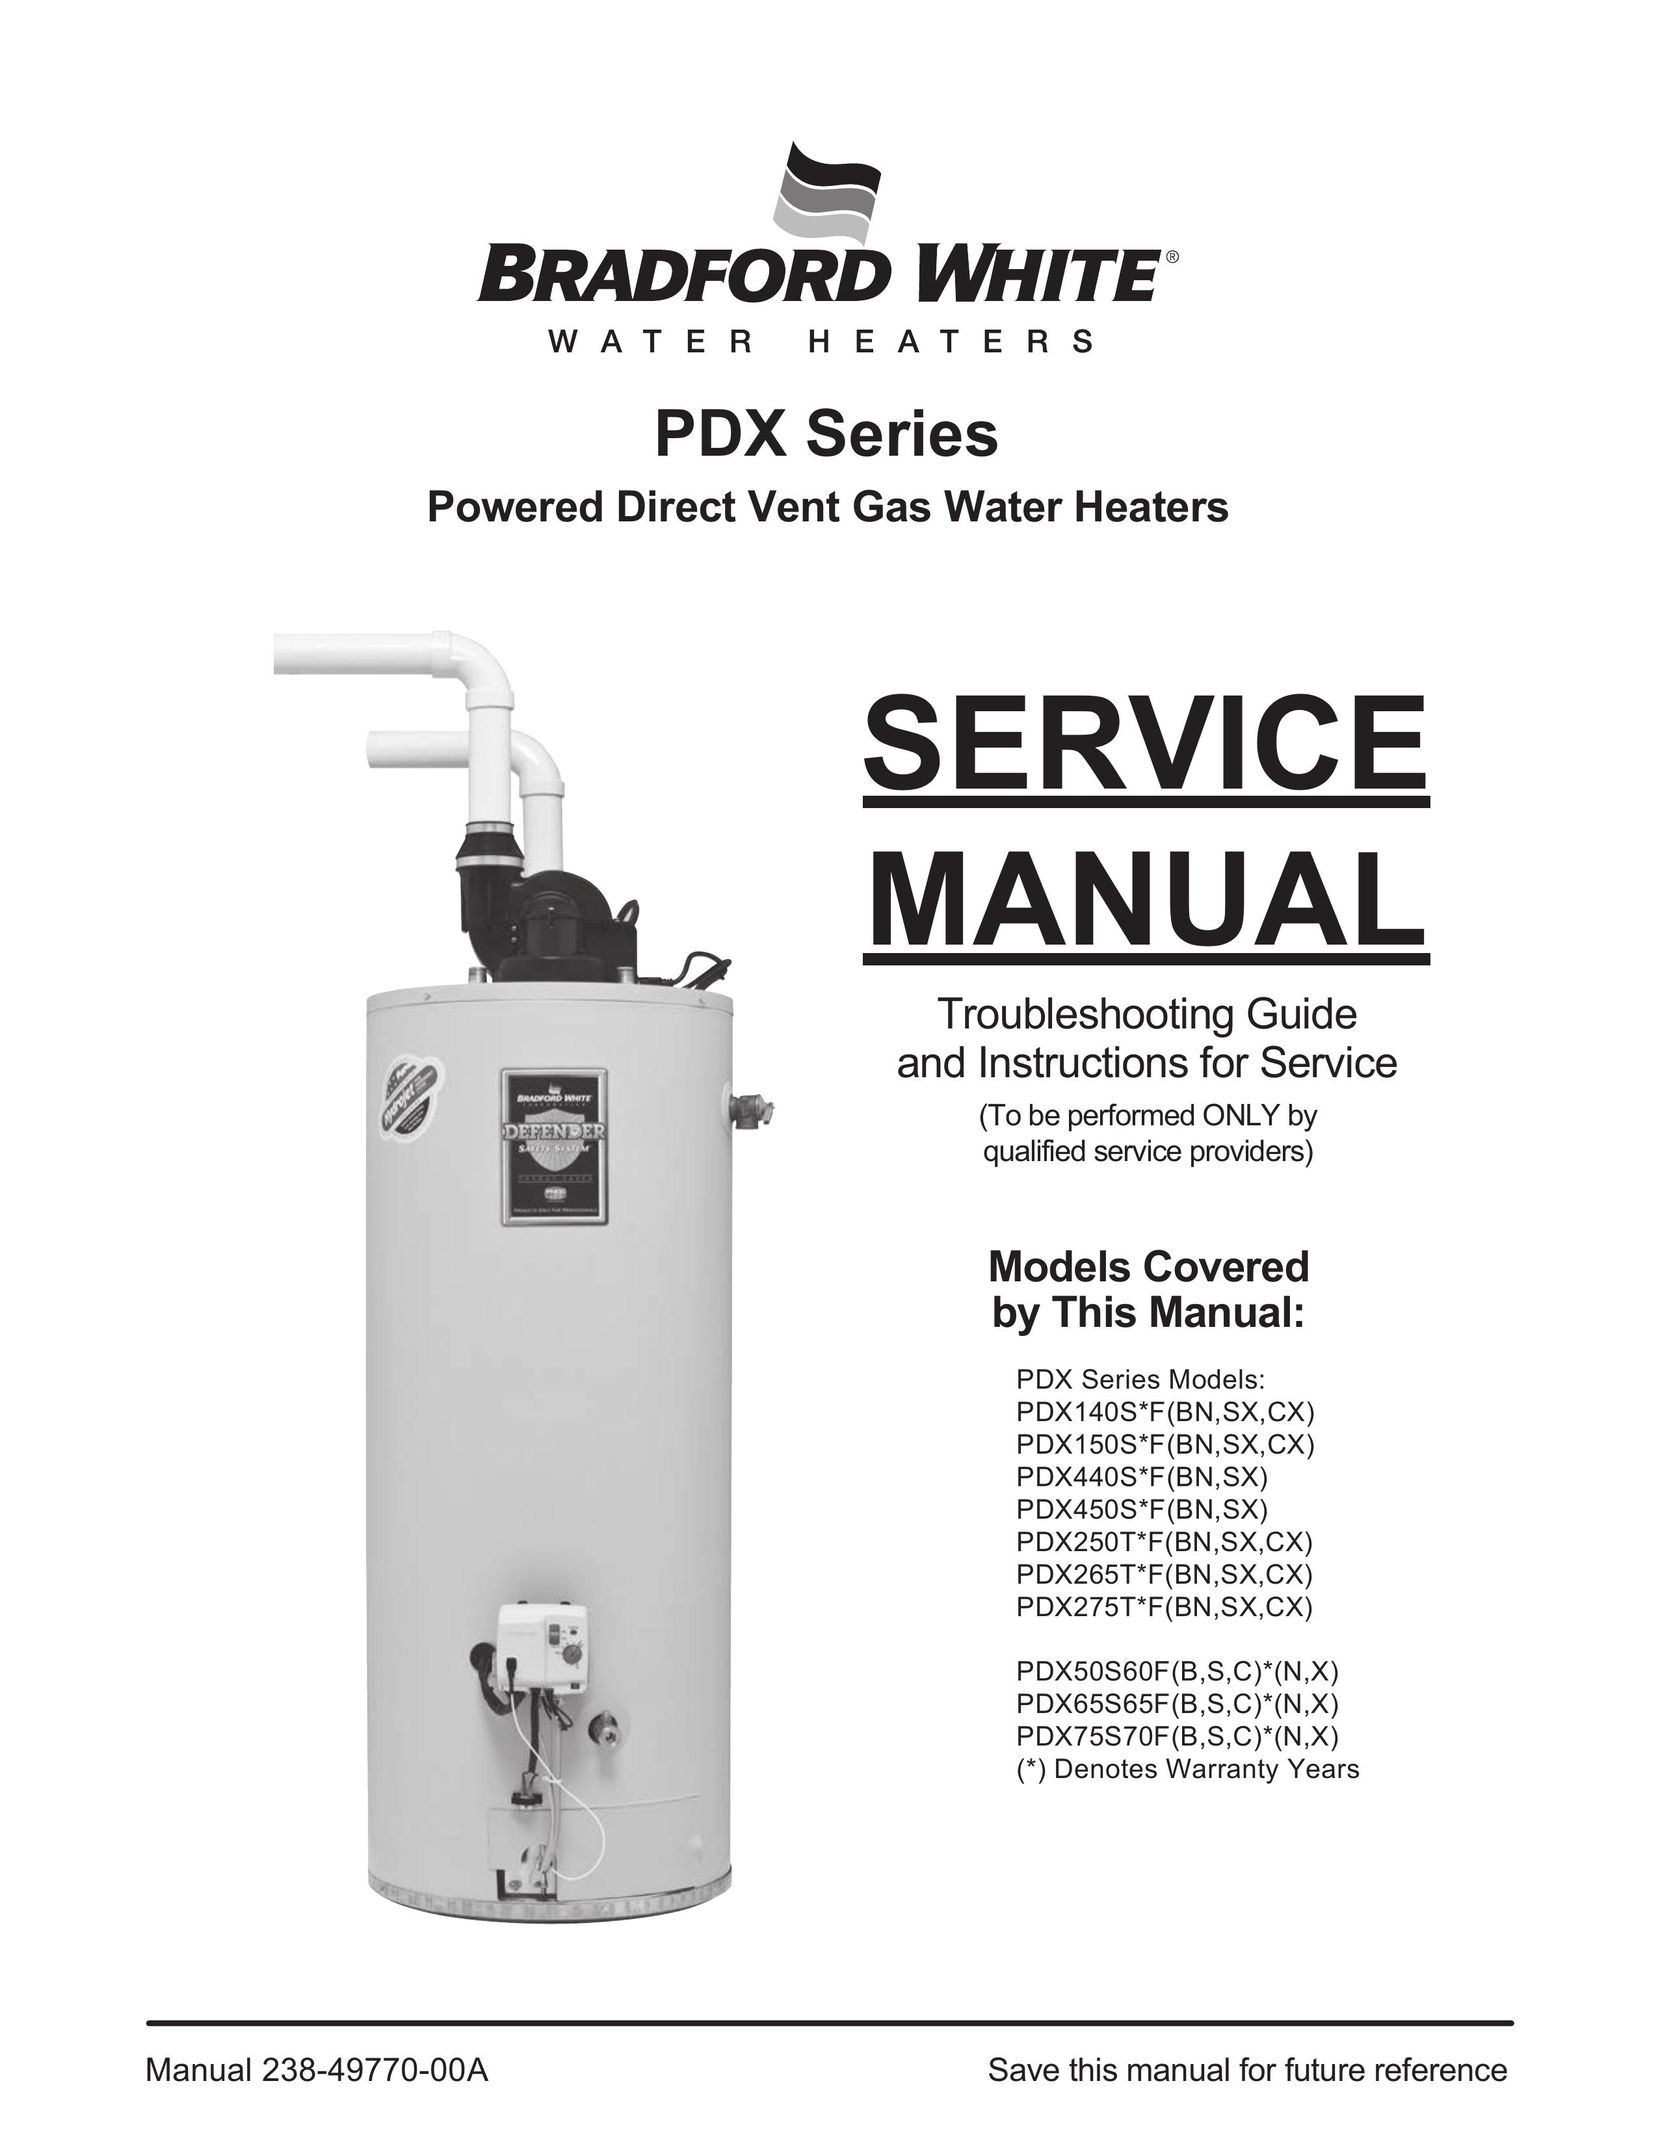 Honeywell PDX275T*F(BN,SX,CX) Water Heater User Manual